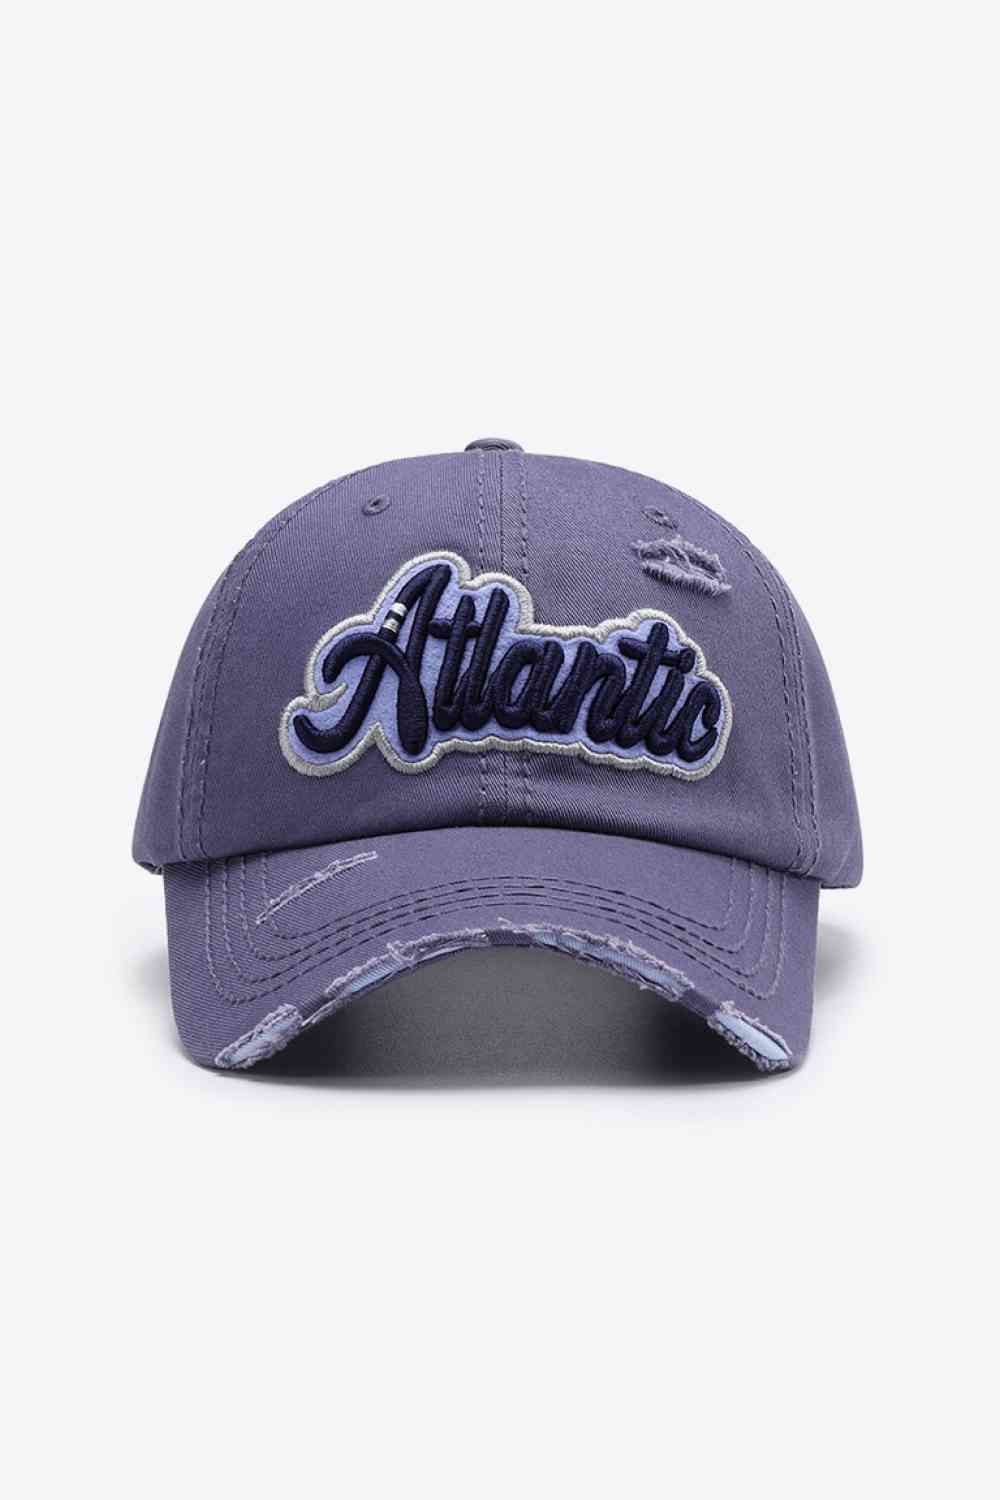 ATLANTIC Graphic Distressed Baseball Cap Purple One Size